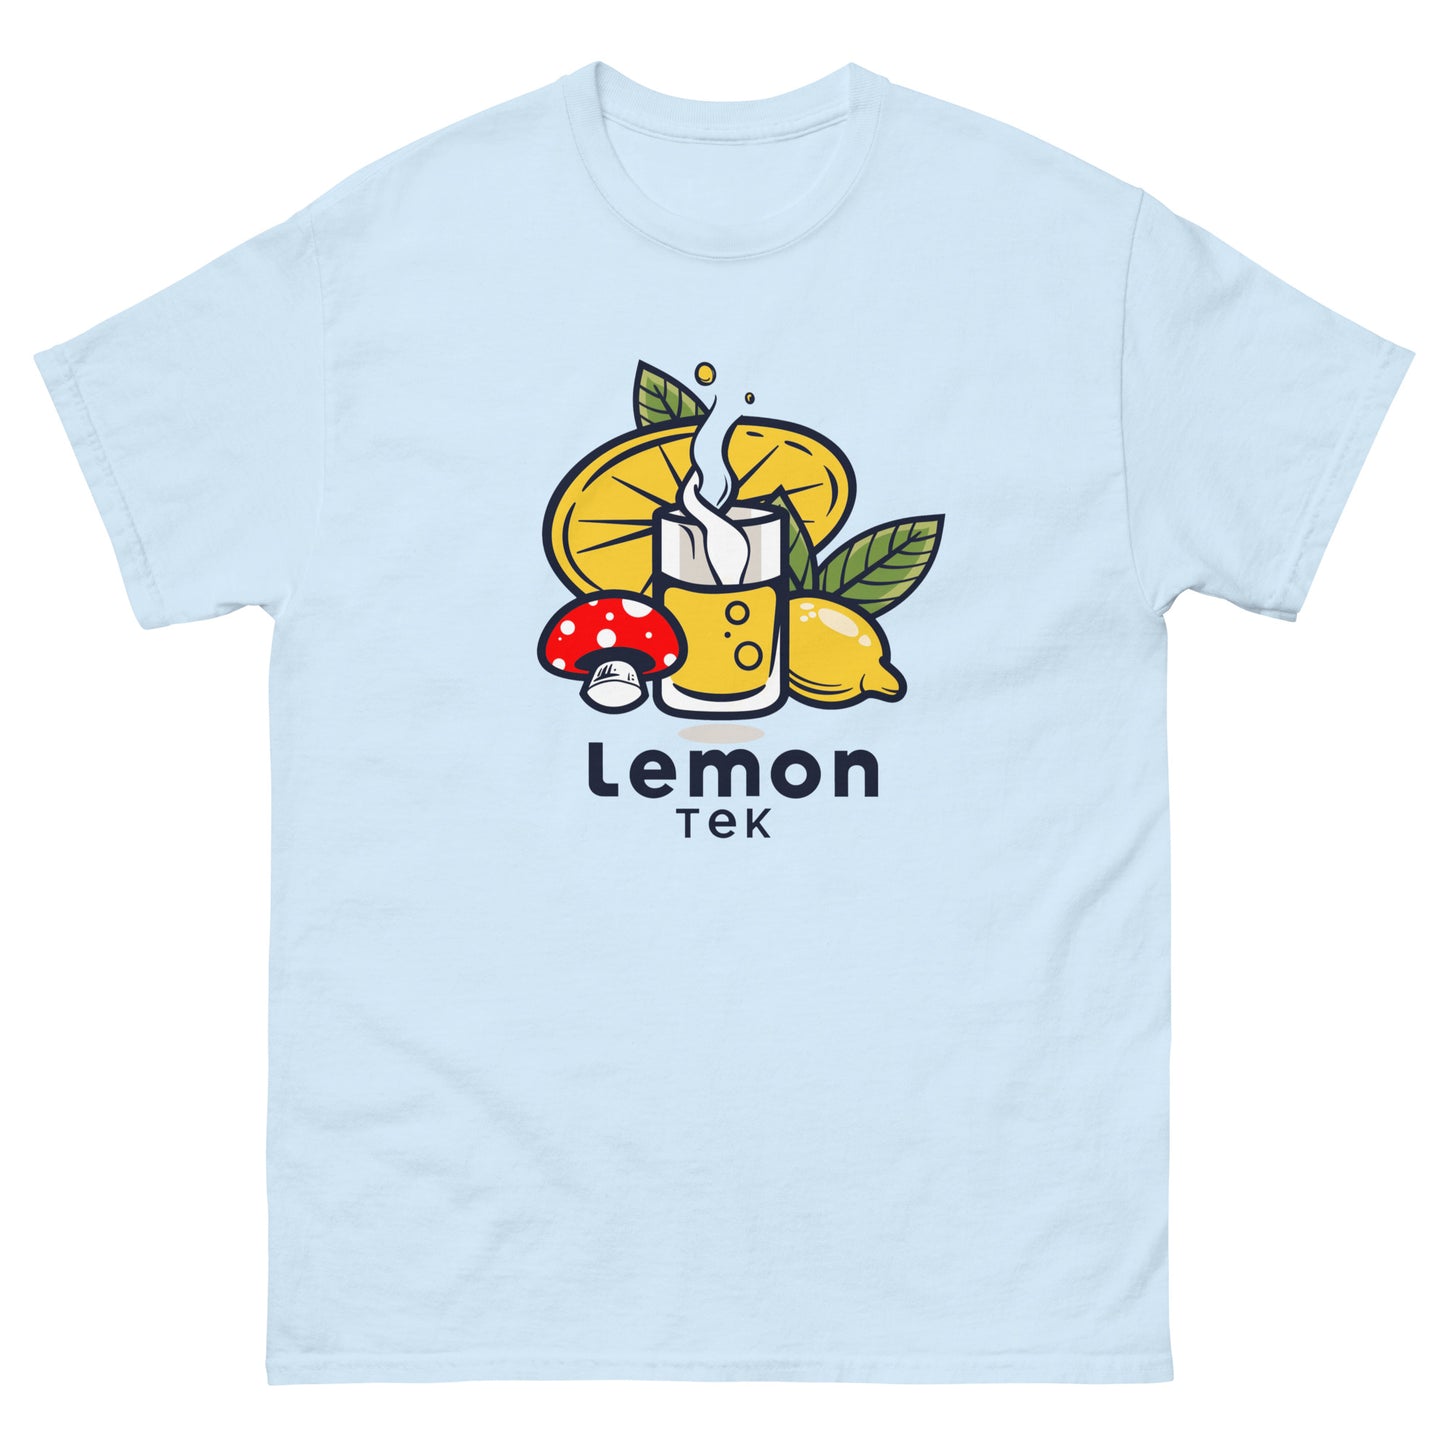 Lemon Tek Tee